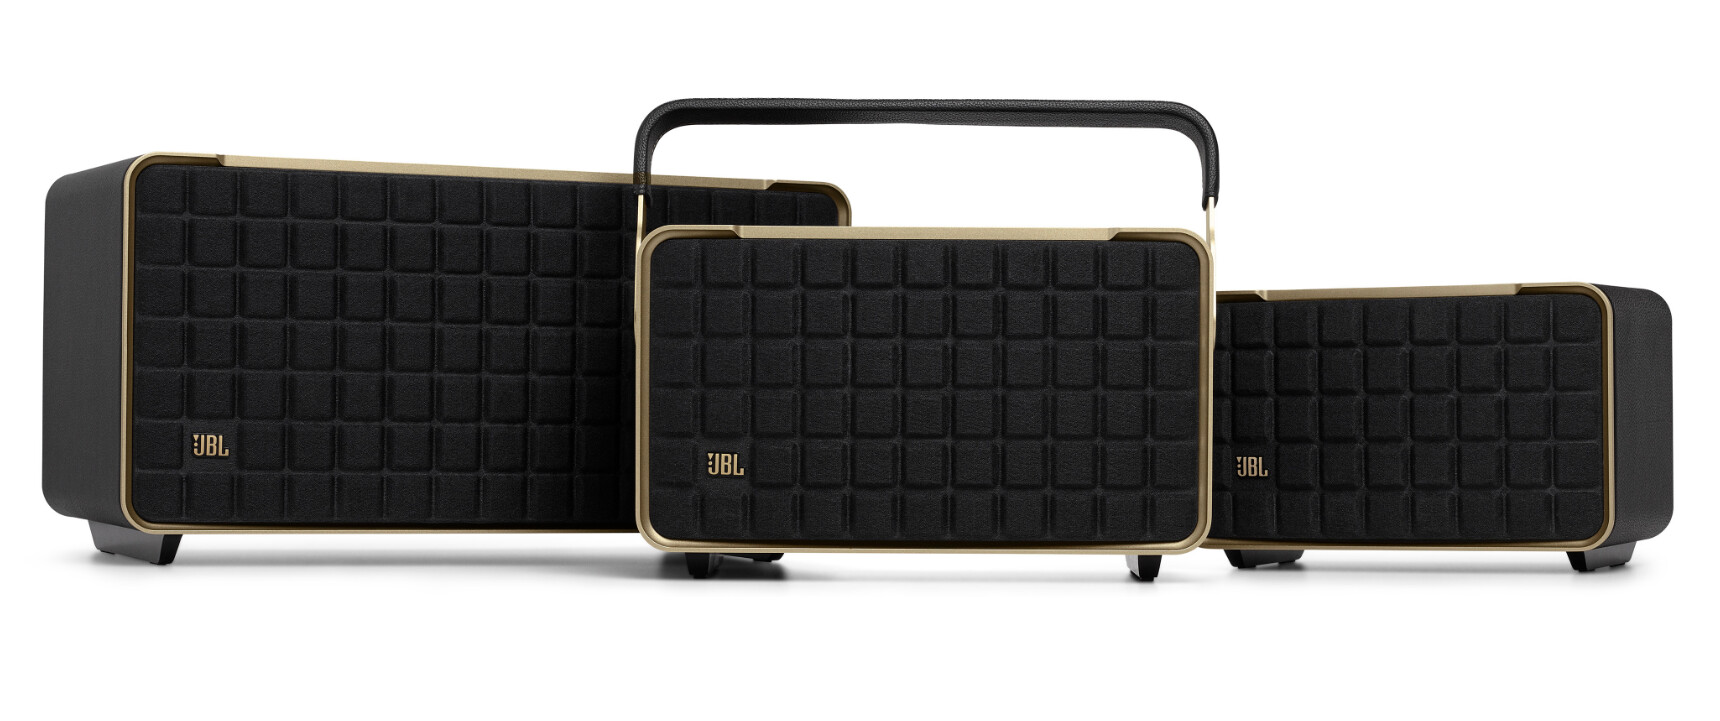 JBL Announces the Authentics Speakers Portable TechPowerUp Series of 